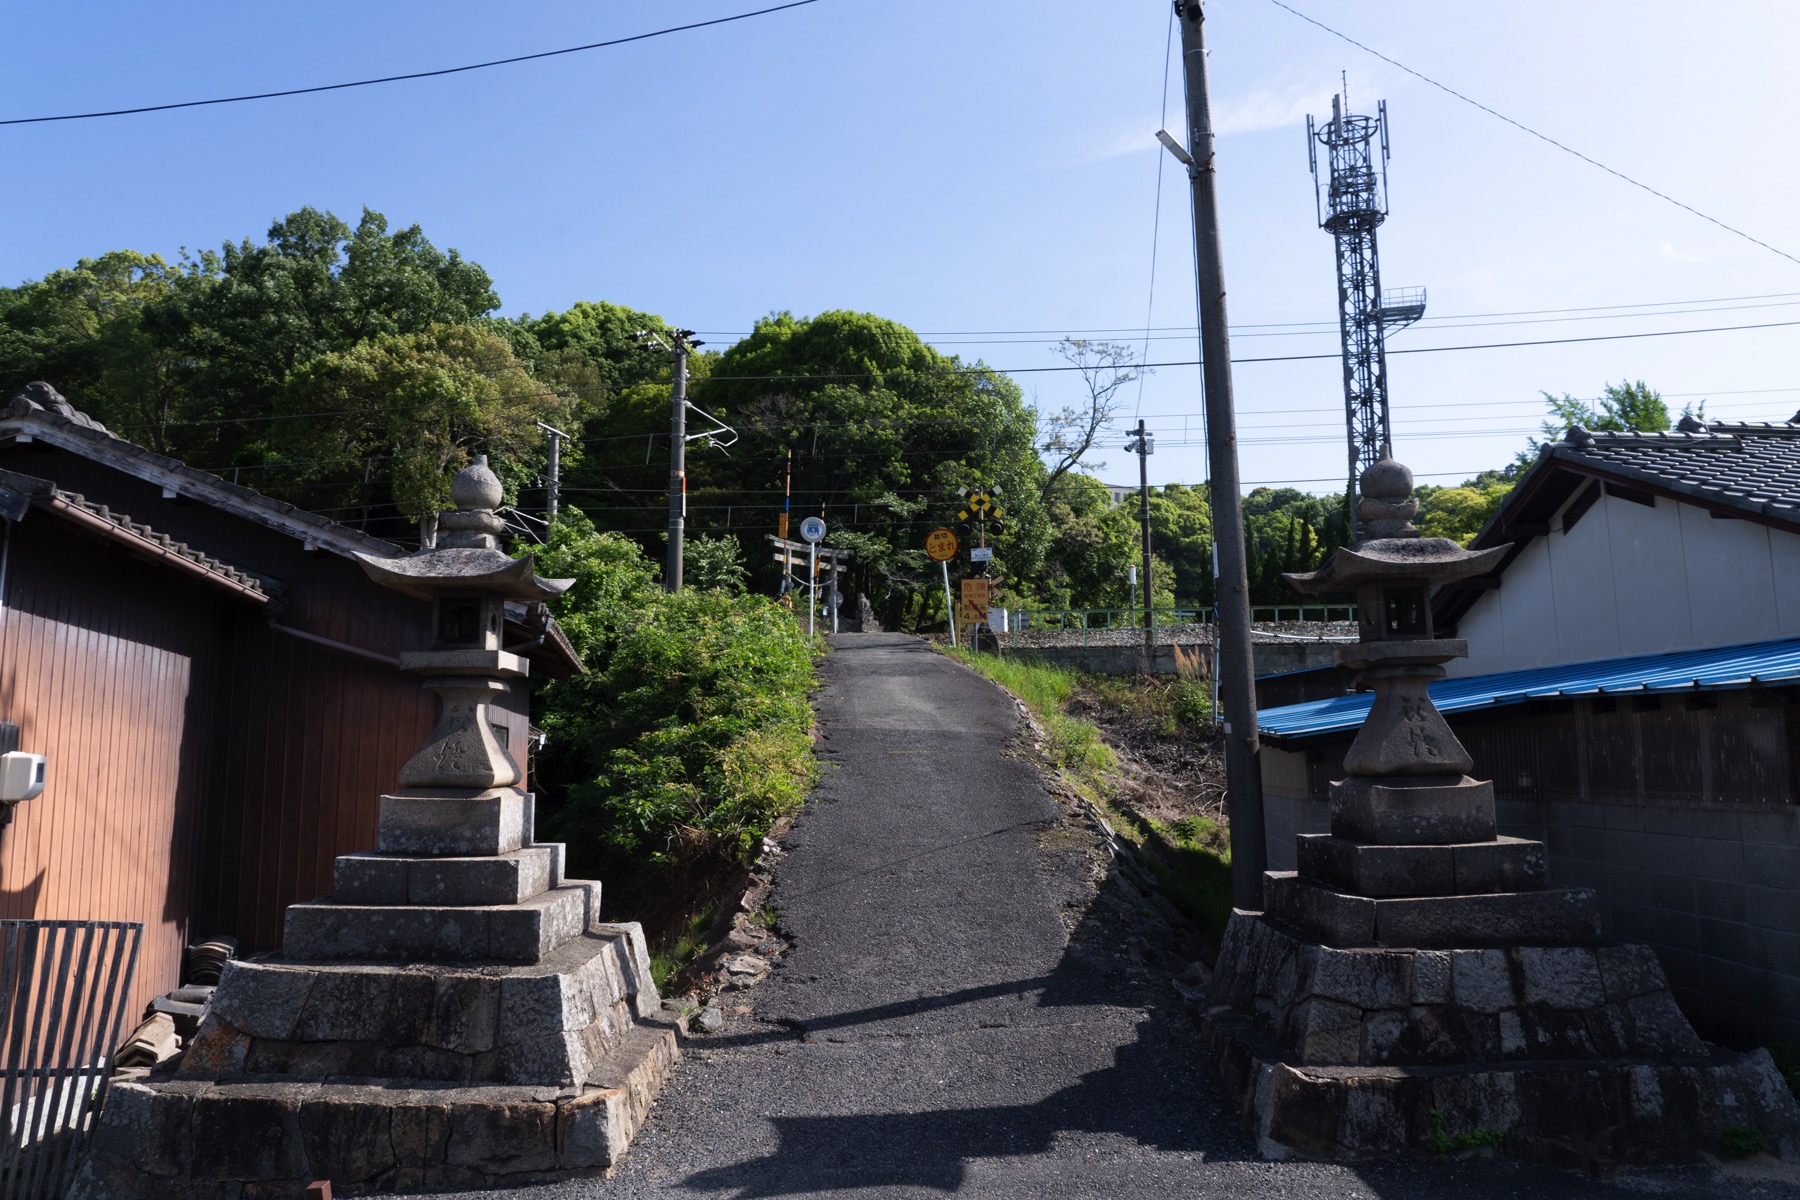 Aoe Shrine and Hakubi Line in Sakazu, Kurashiki, Okayama